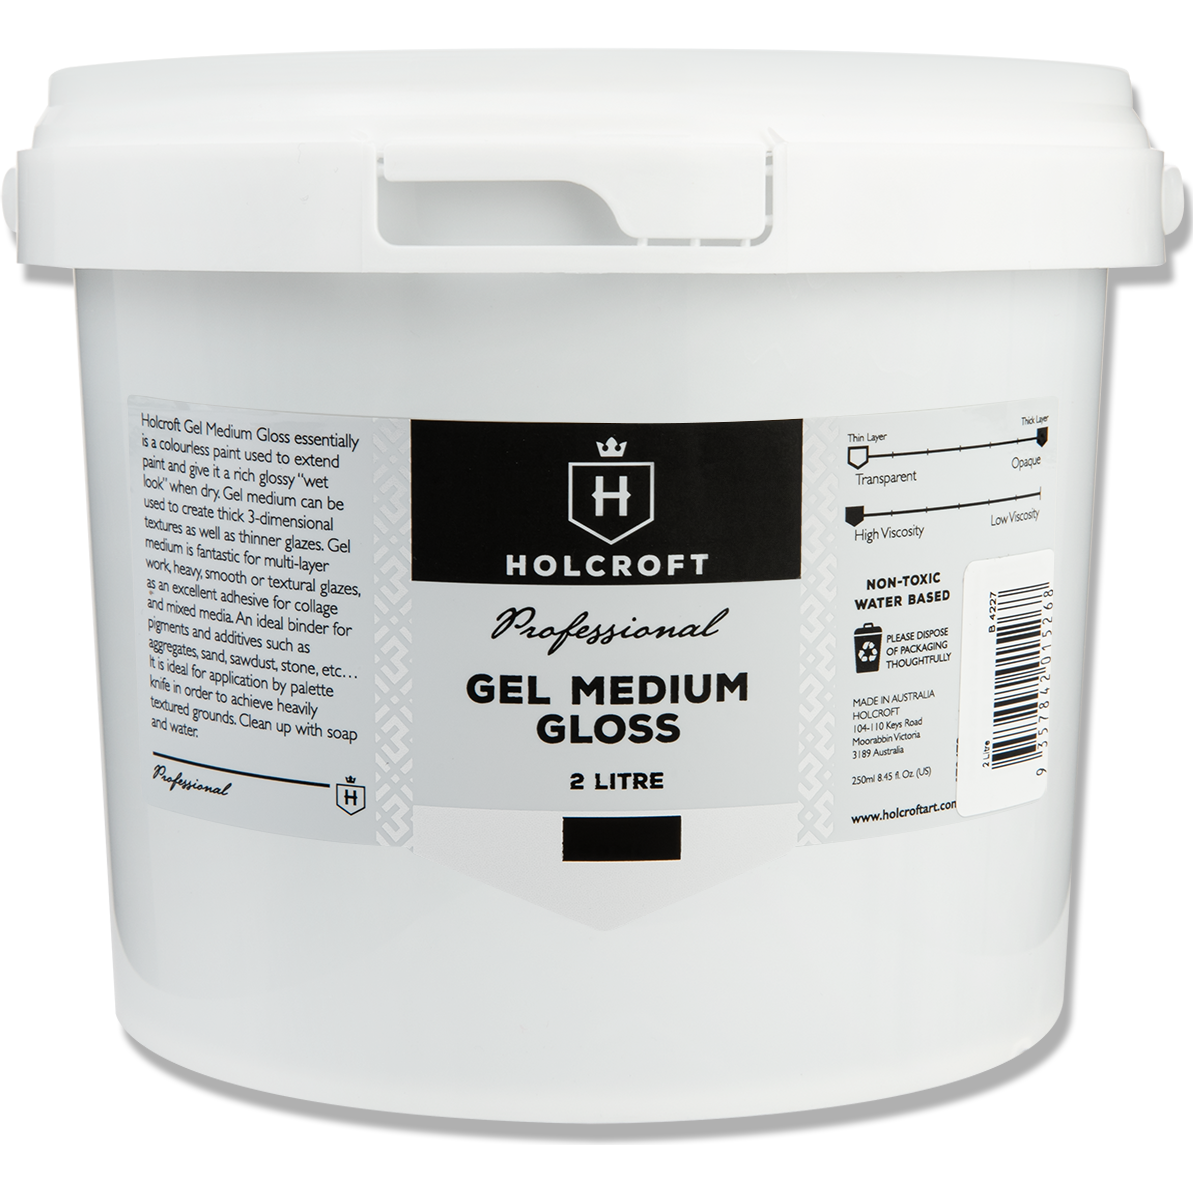 Image of Holcroft Professional Acrylic Gel Medium Gloss 2 Litre